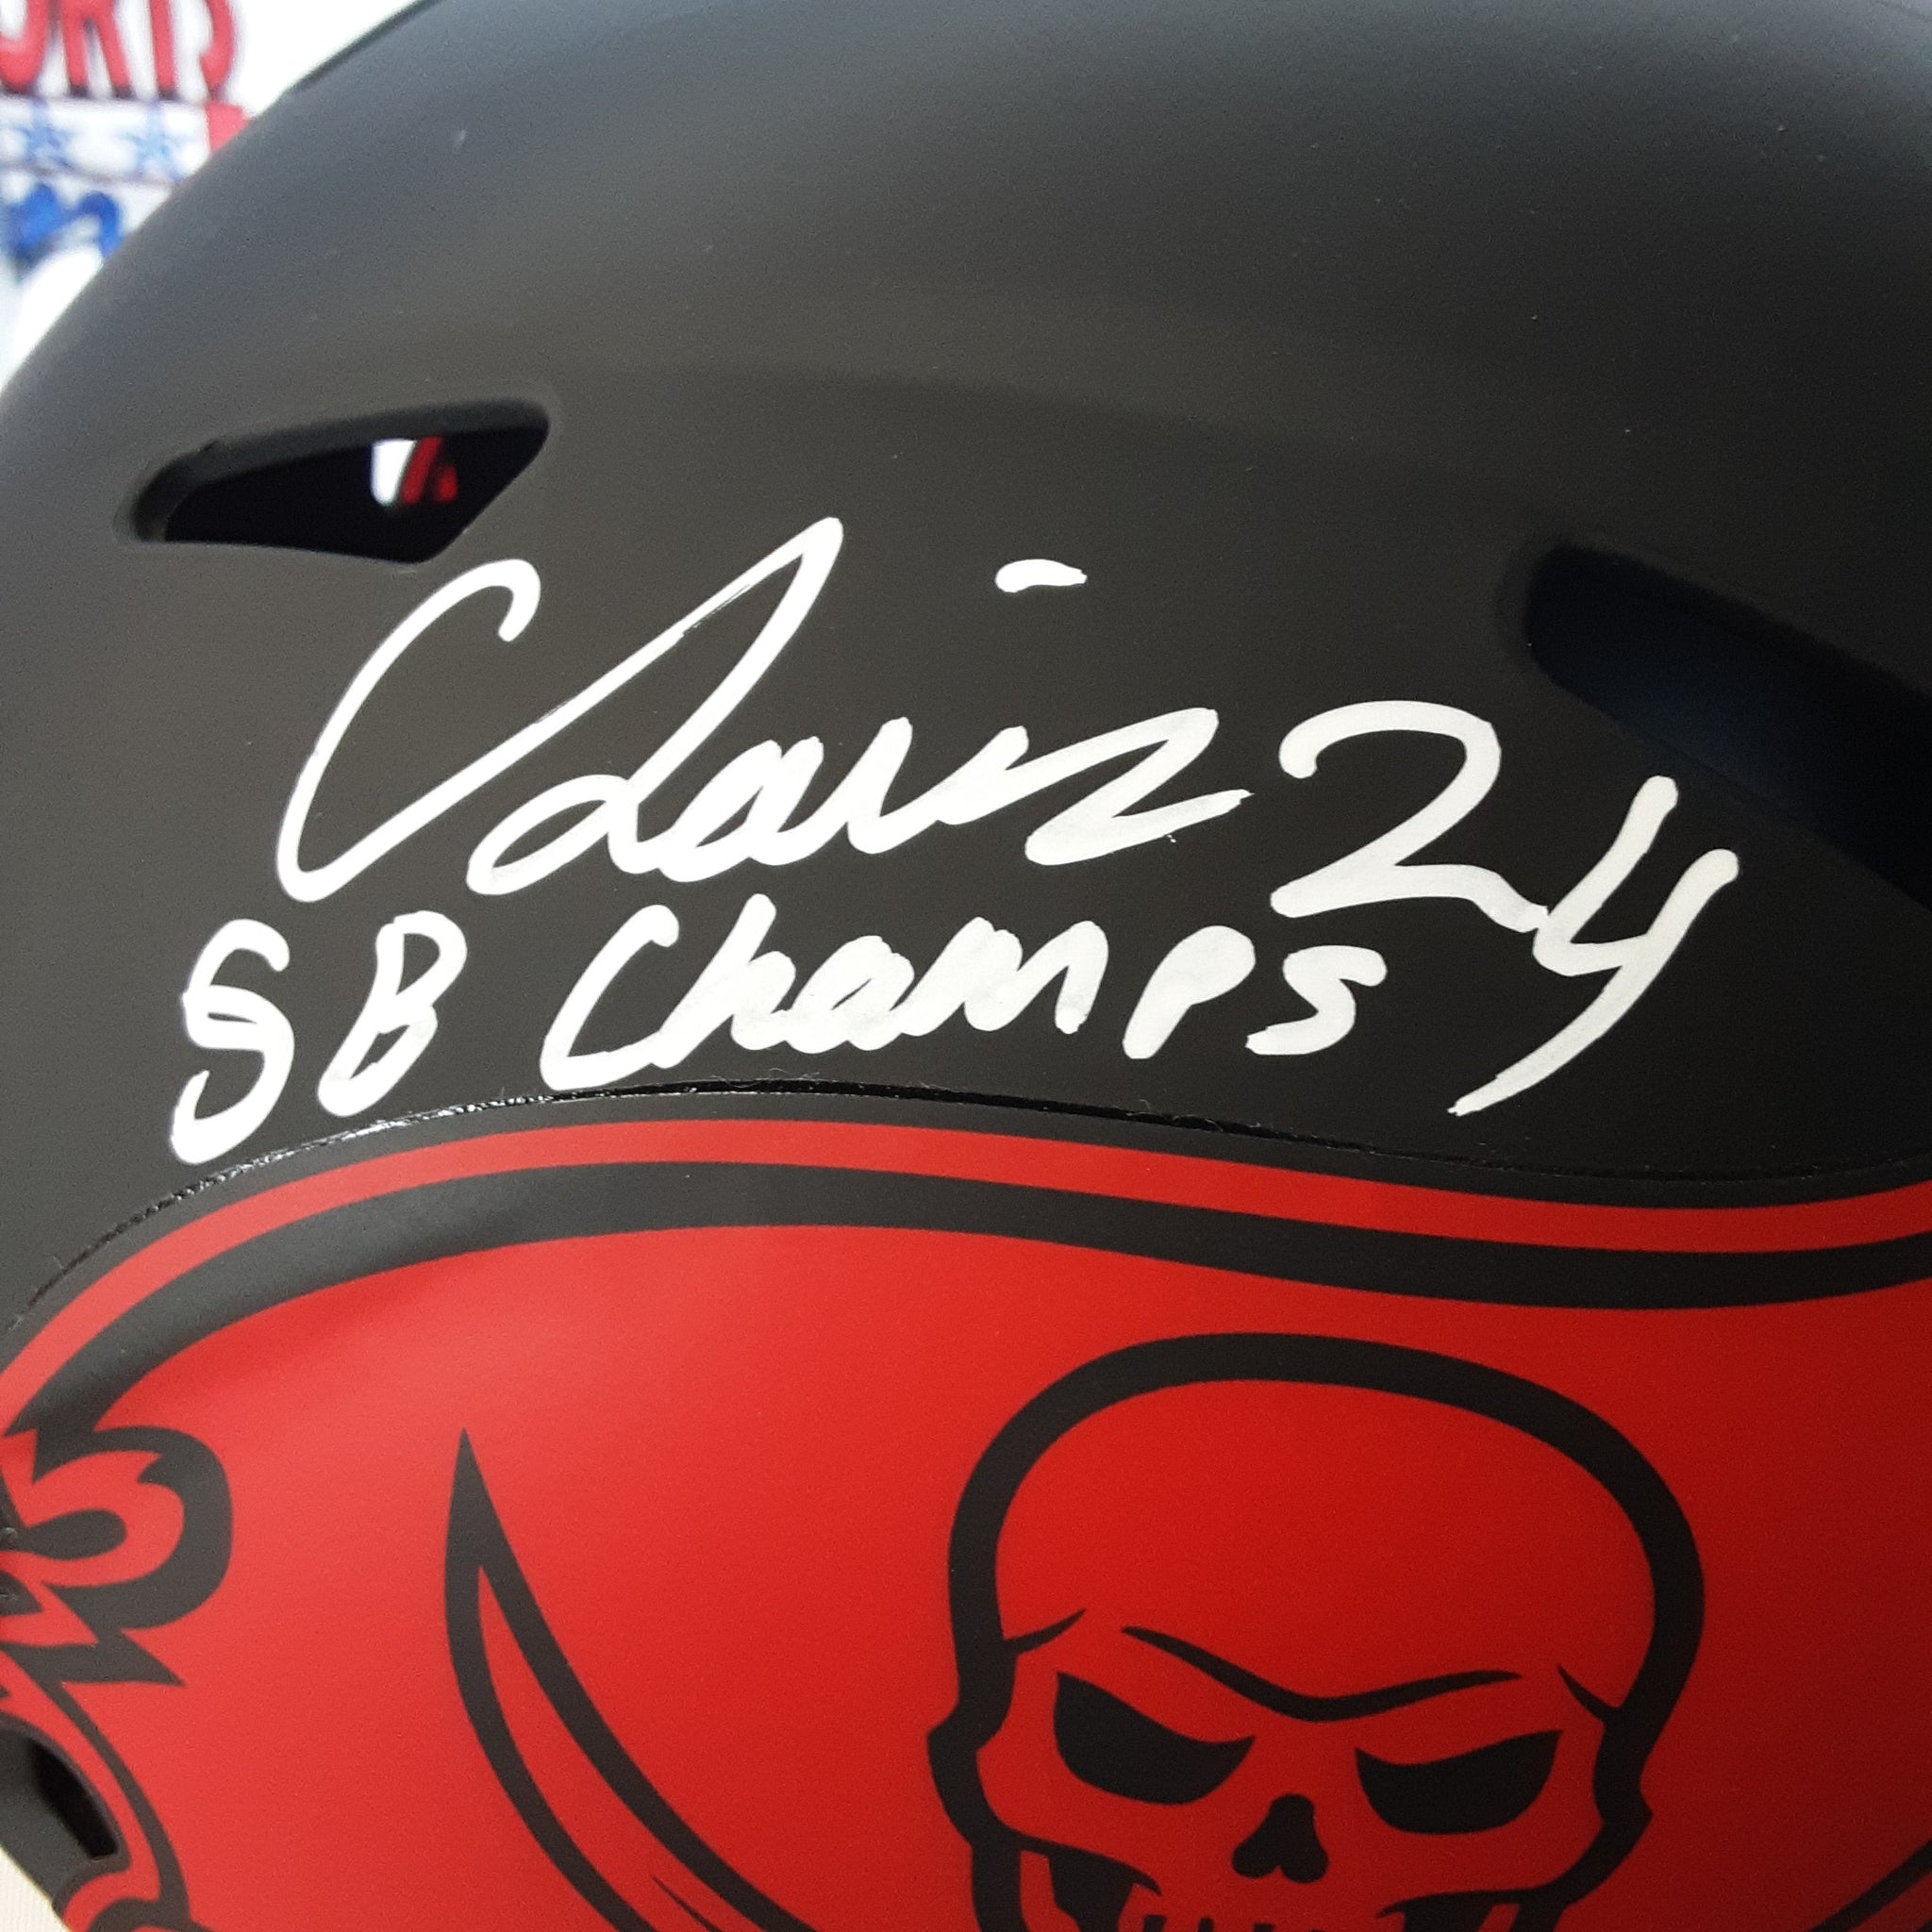 Carlton Davis Authentic Signed with inscription Autographed Full-size Replica Helmet JSA